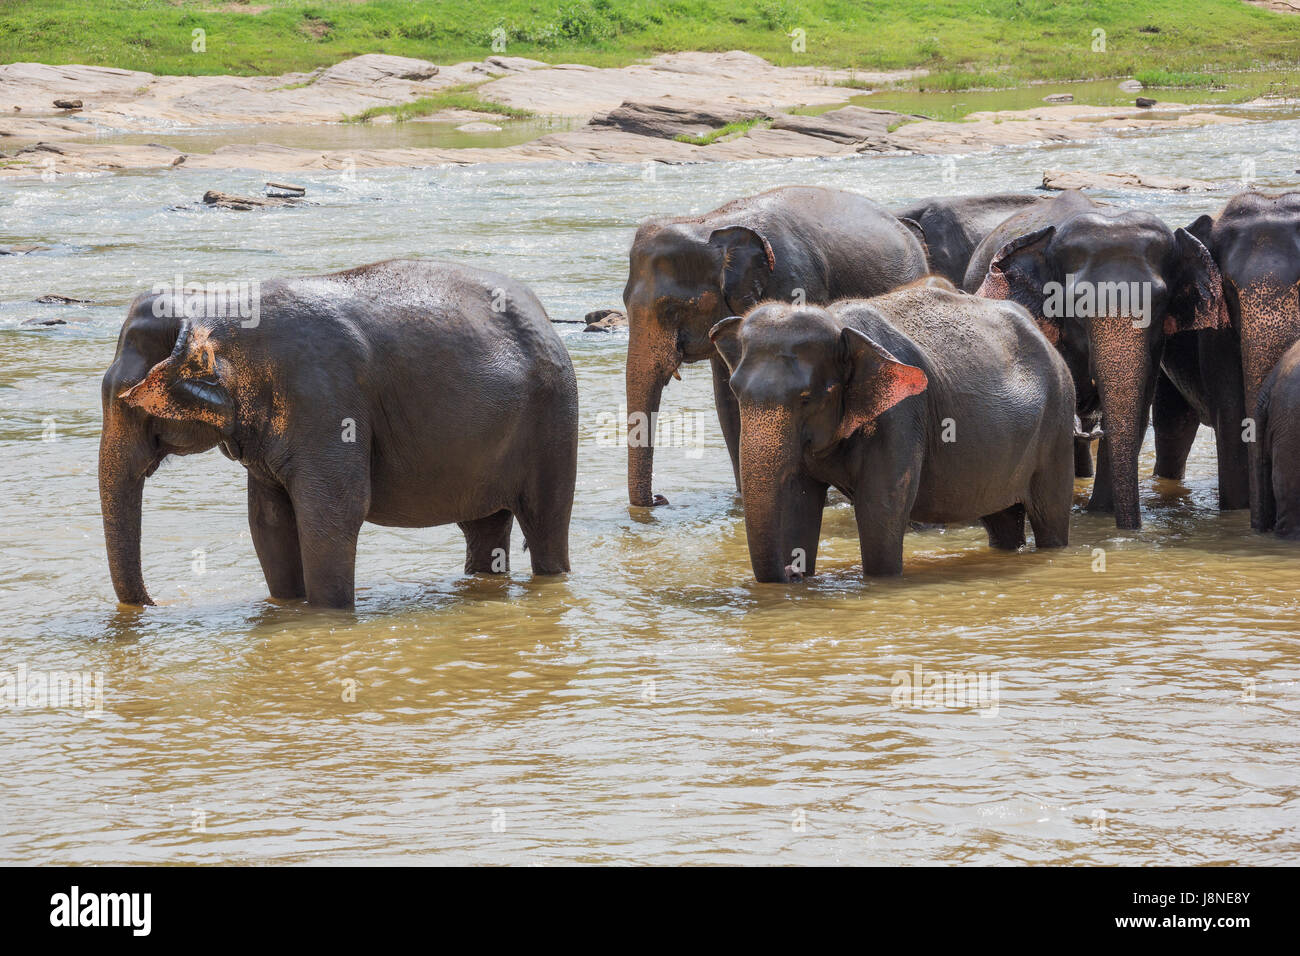 Elephant herd enjoying the cool water. Selective focus on the herd. Stock Photo